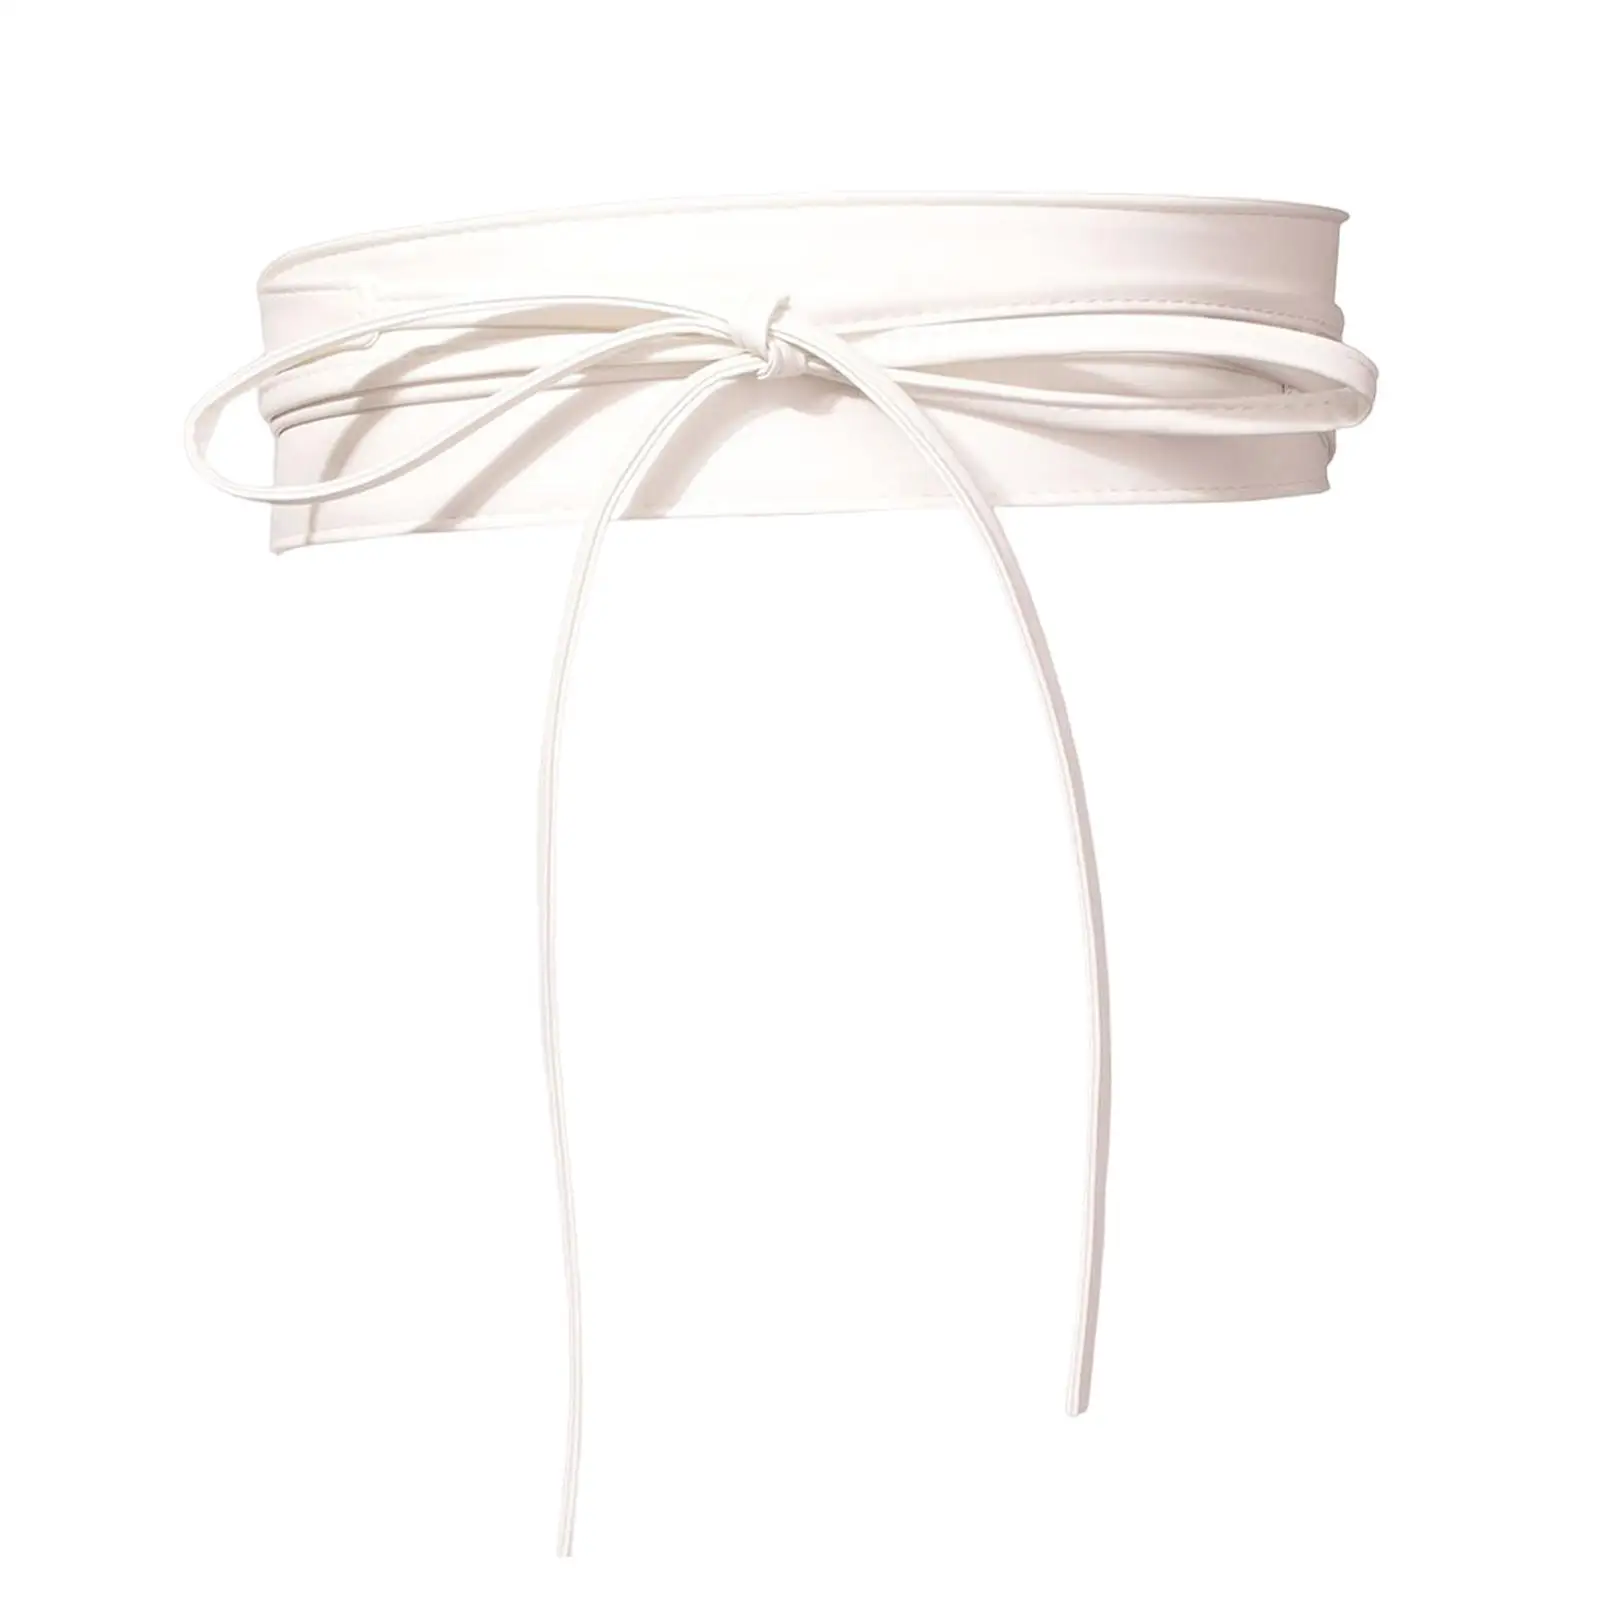 Flexible Wide Waist Belt PU Leather Casual Decorative Wrap Around Elegant Waistband for Ladies Girl Parties Mini Skirt Blazer